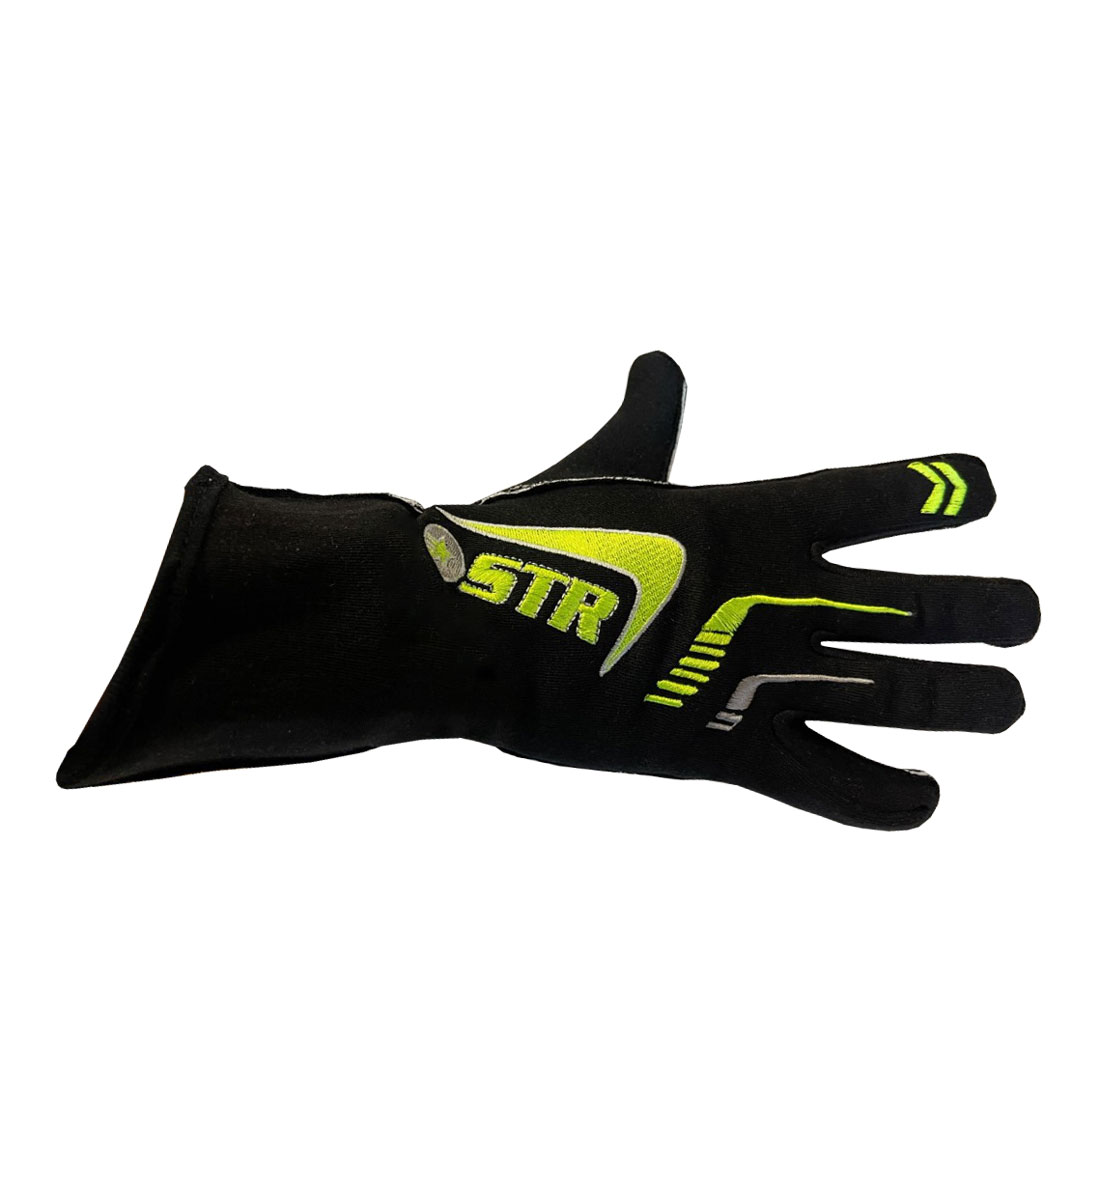 STR Raceline Race Glove - Black/Yellow Flou